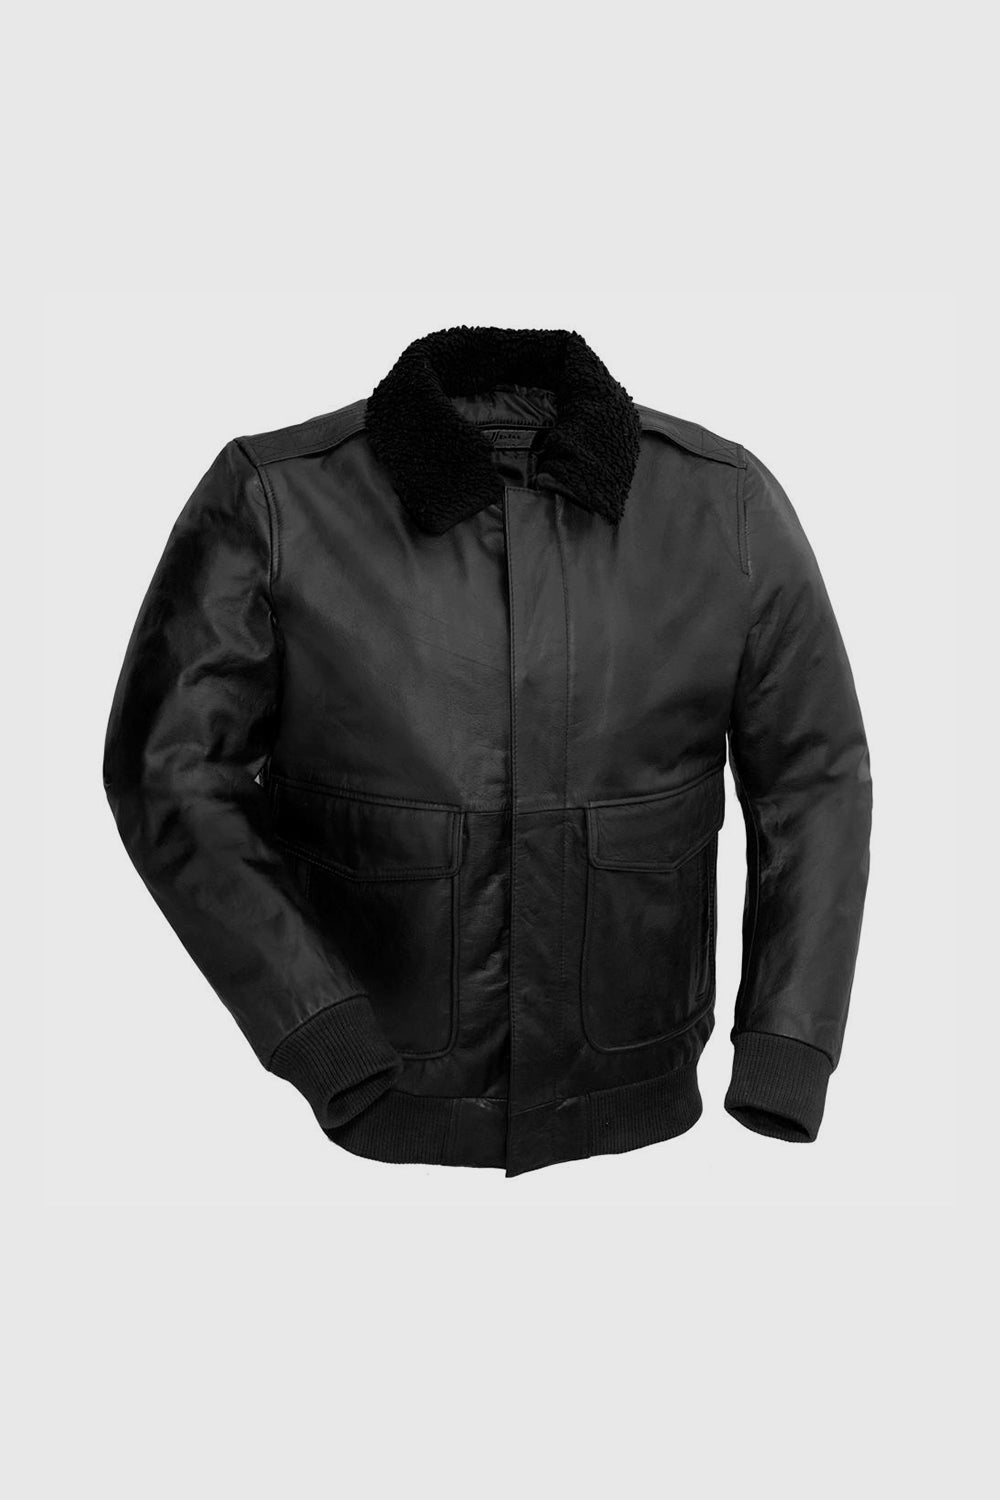 Mens Bomber Leather Jacket Black Men's Bomber Jacket Whet Blu NYC XS BLACK 